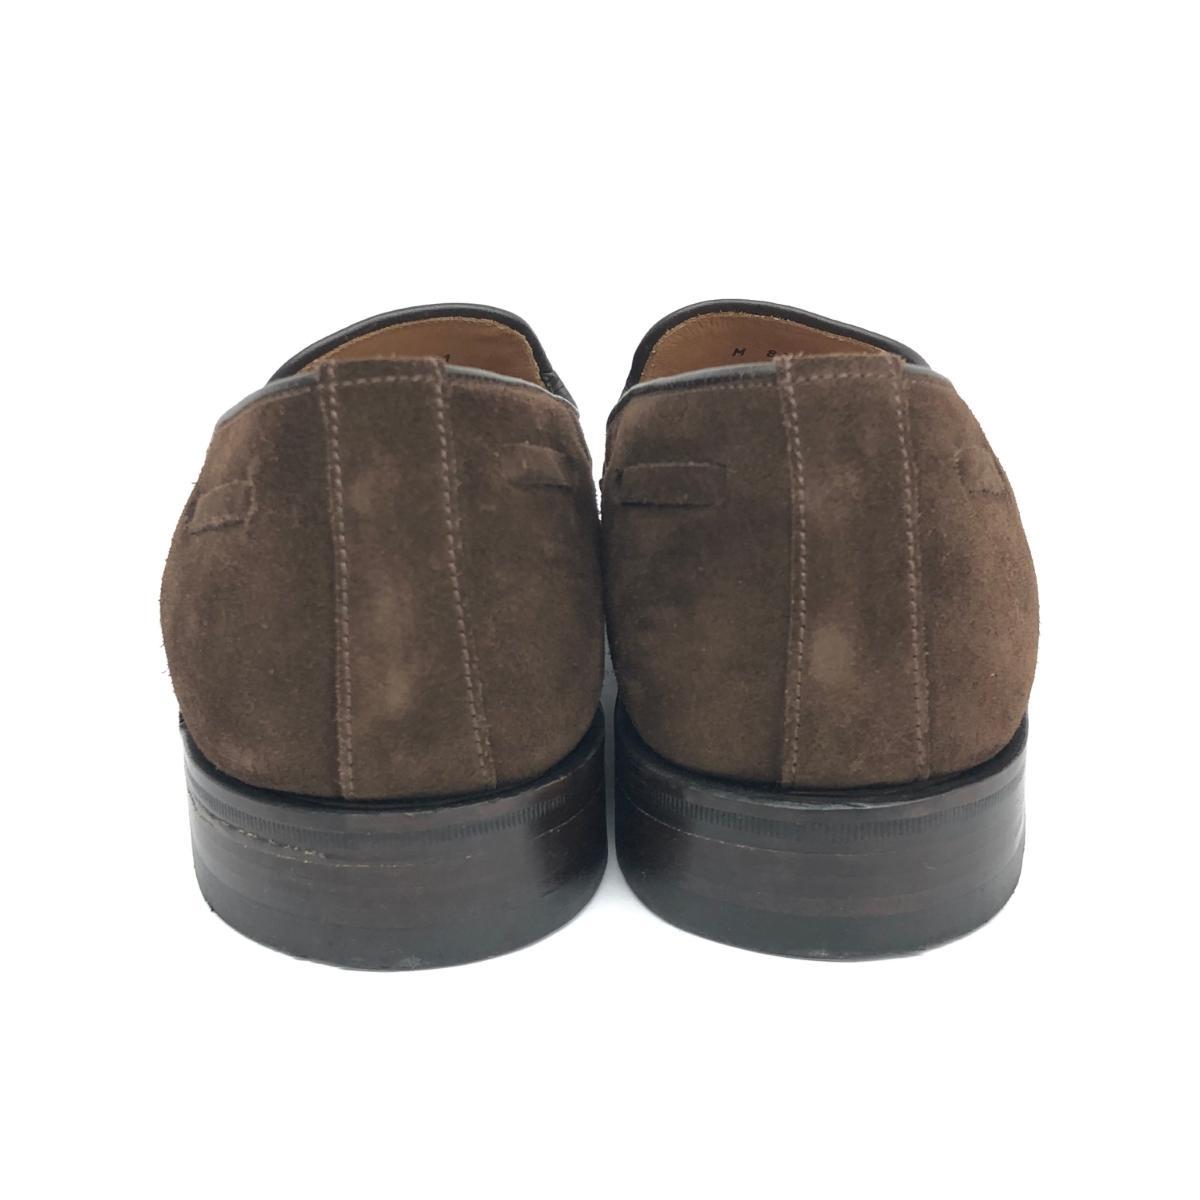  хороший *Loake low k Loafer 8.5* Brown замша кисточка мужской обувь бизнес обувь кожа обувь 